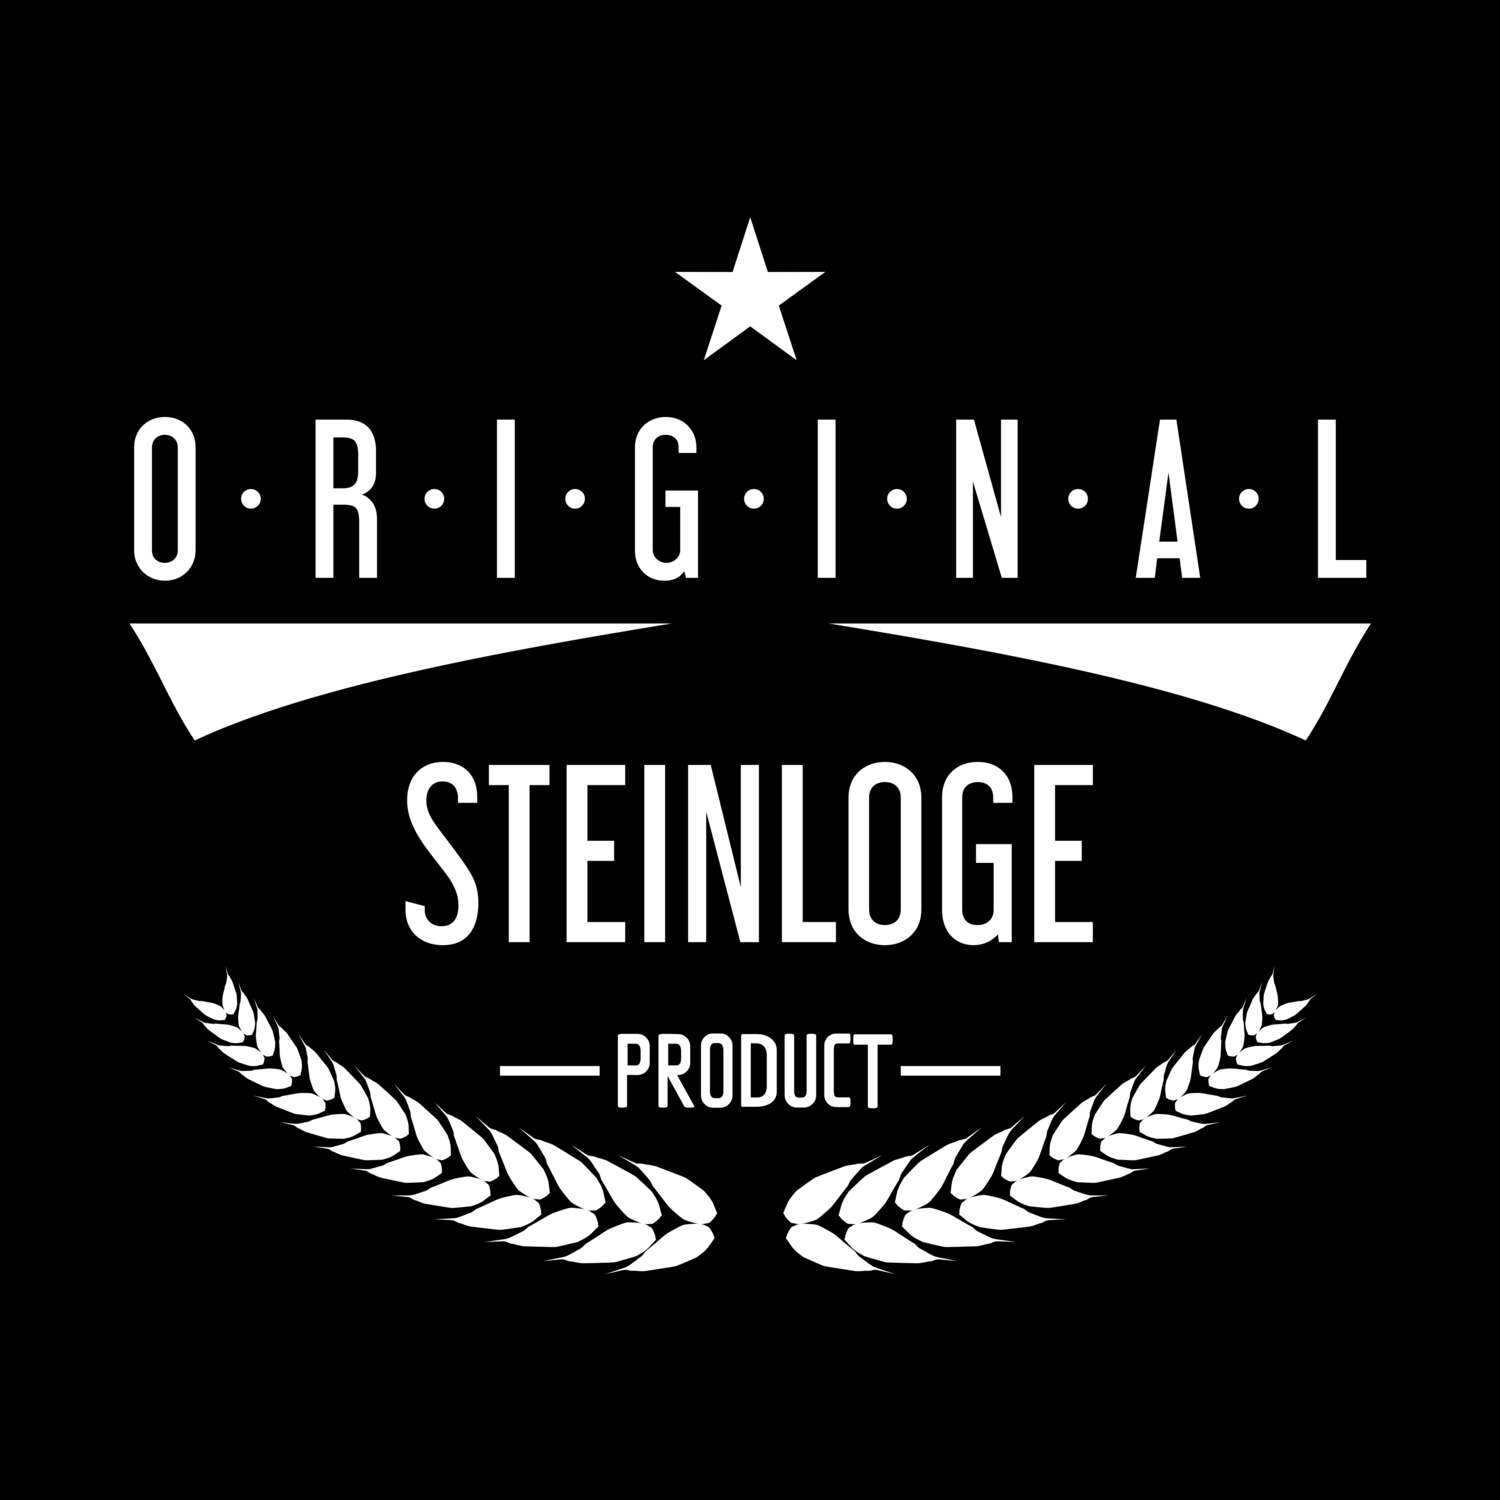 Steinloge T-Shirt »Original Product«